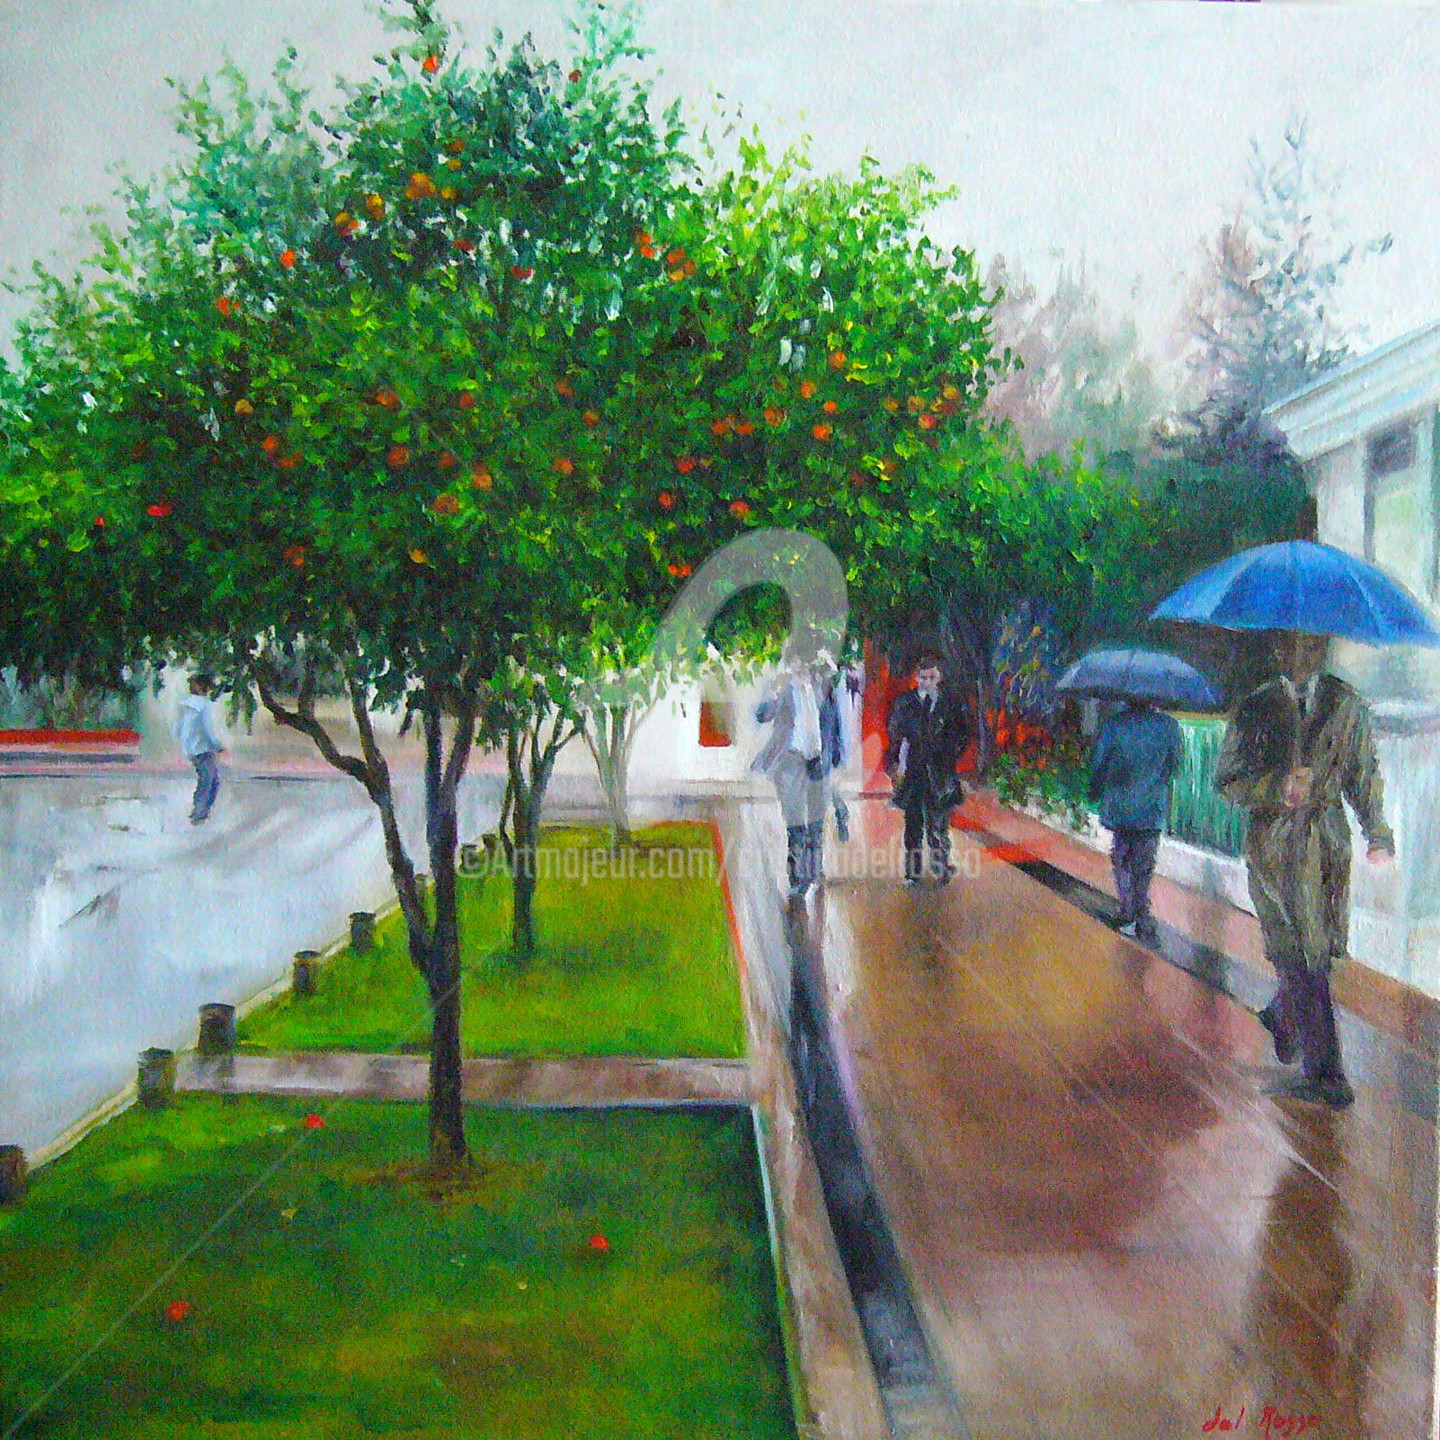 Cristina Del Rosso - Naranjos en día de lluvia (Orangetrees, rainy day)